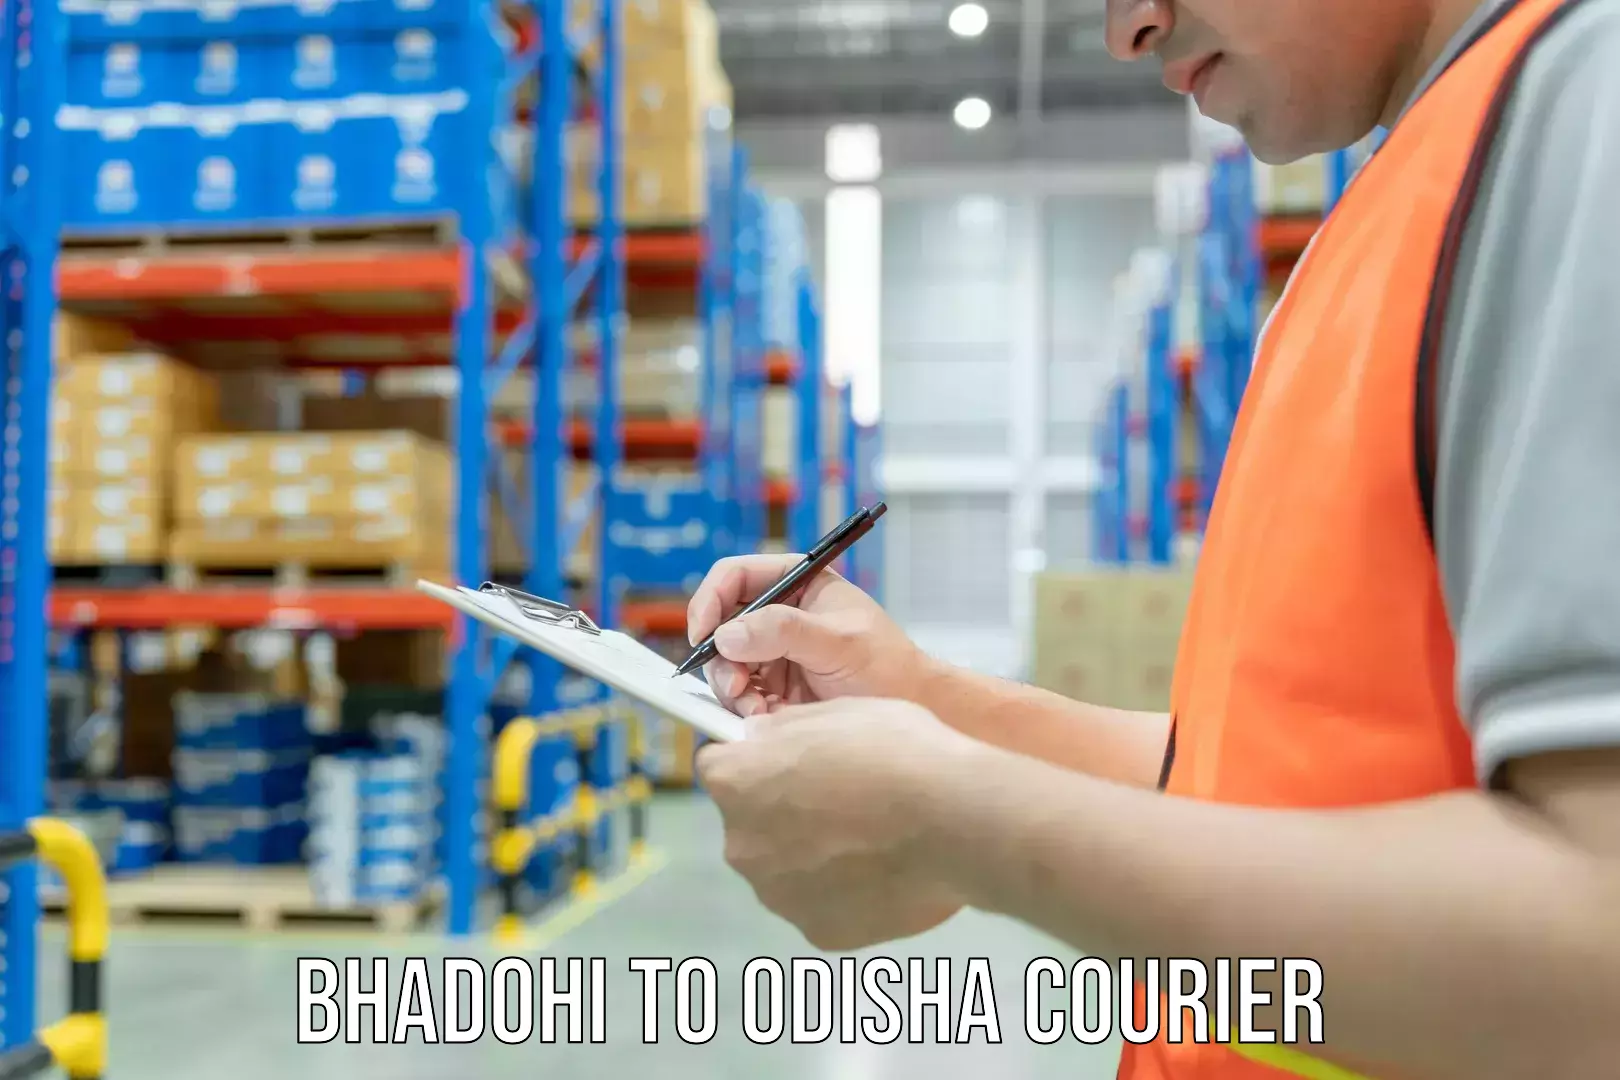 Seamless shipping service Bhadohi to Odisha